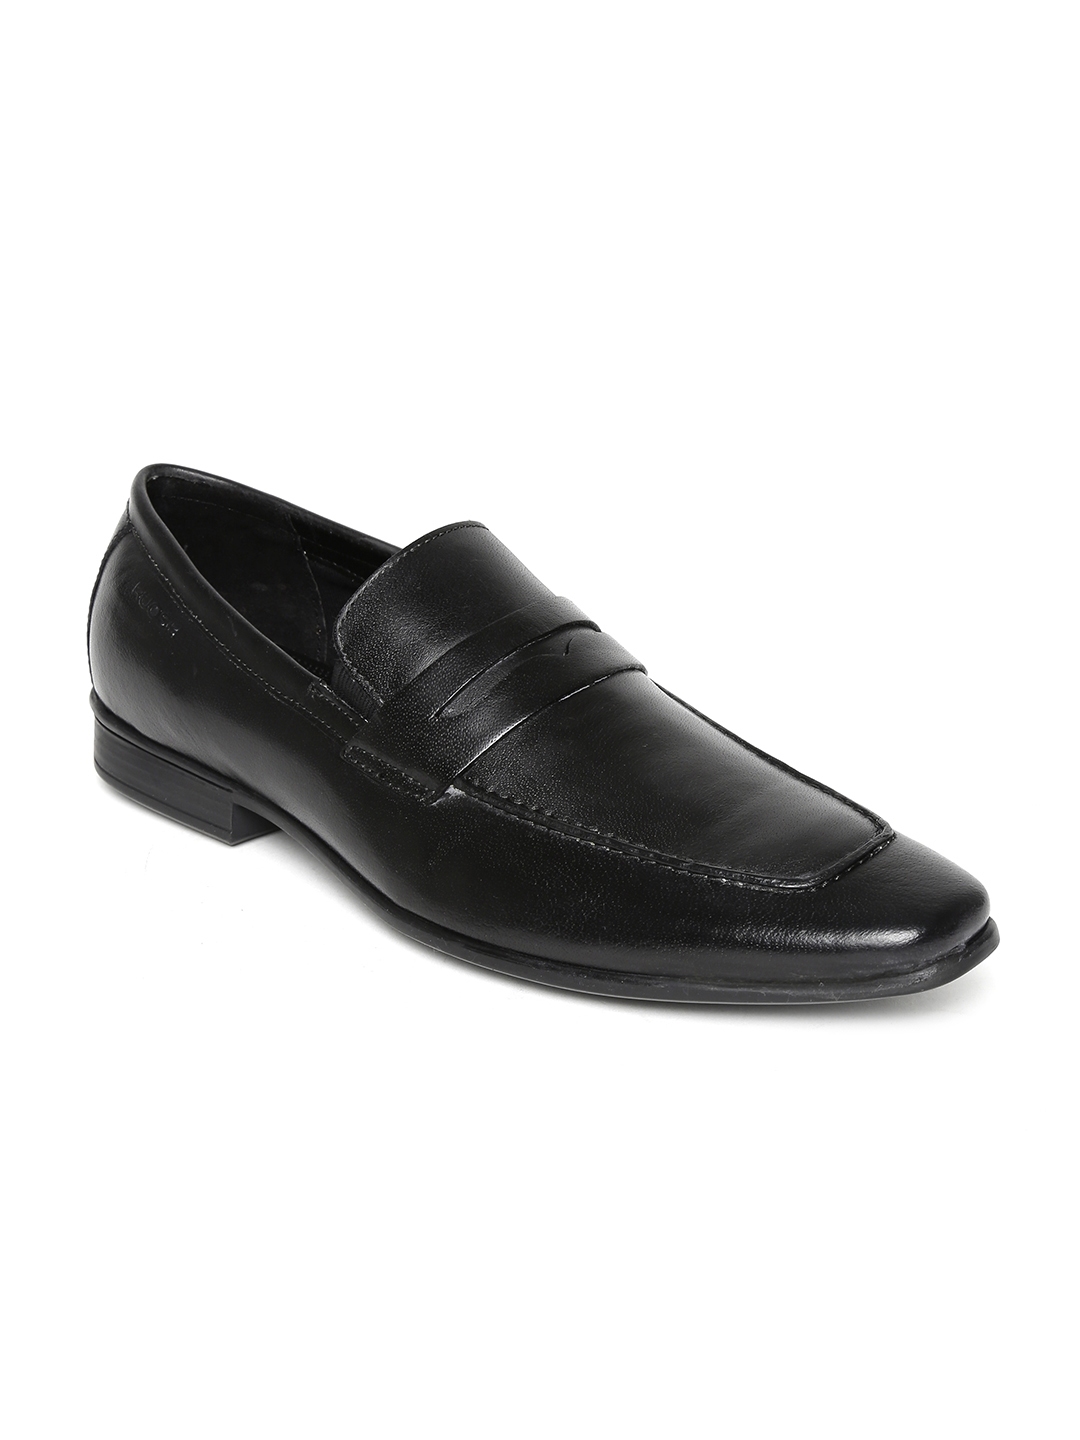 Buy Ruosh Men Black Leather Semiformal Shoes - Formal Shoes for Men ...